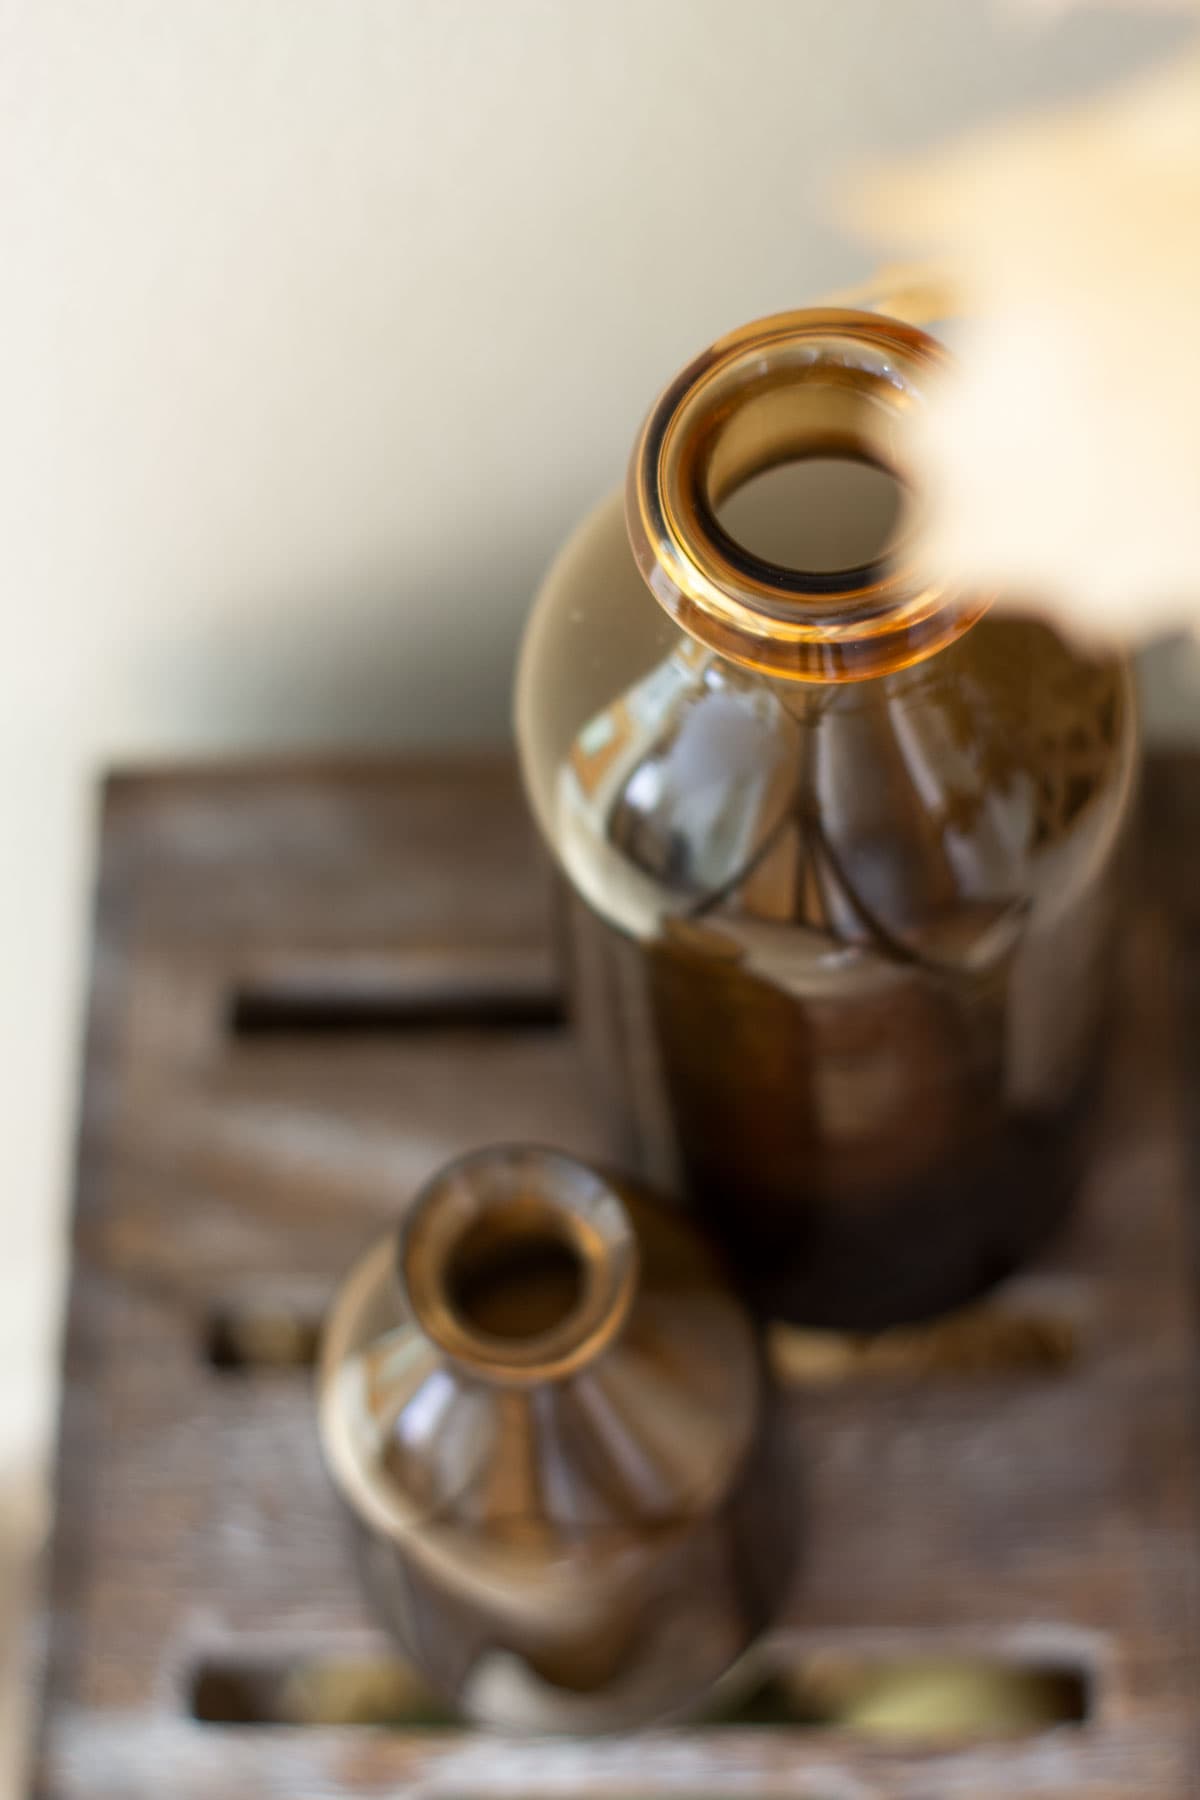 amber bottles on wood surface